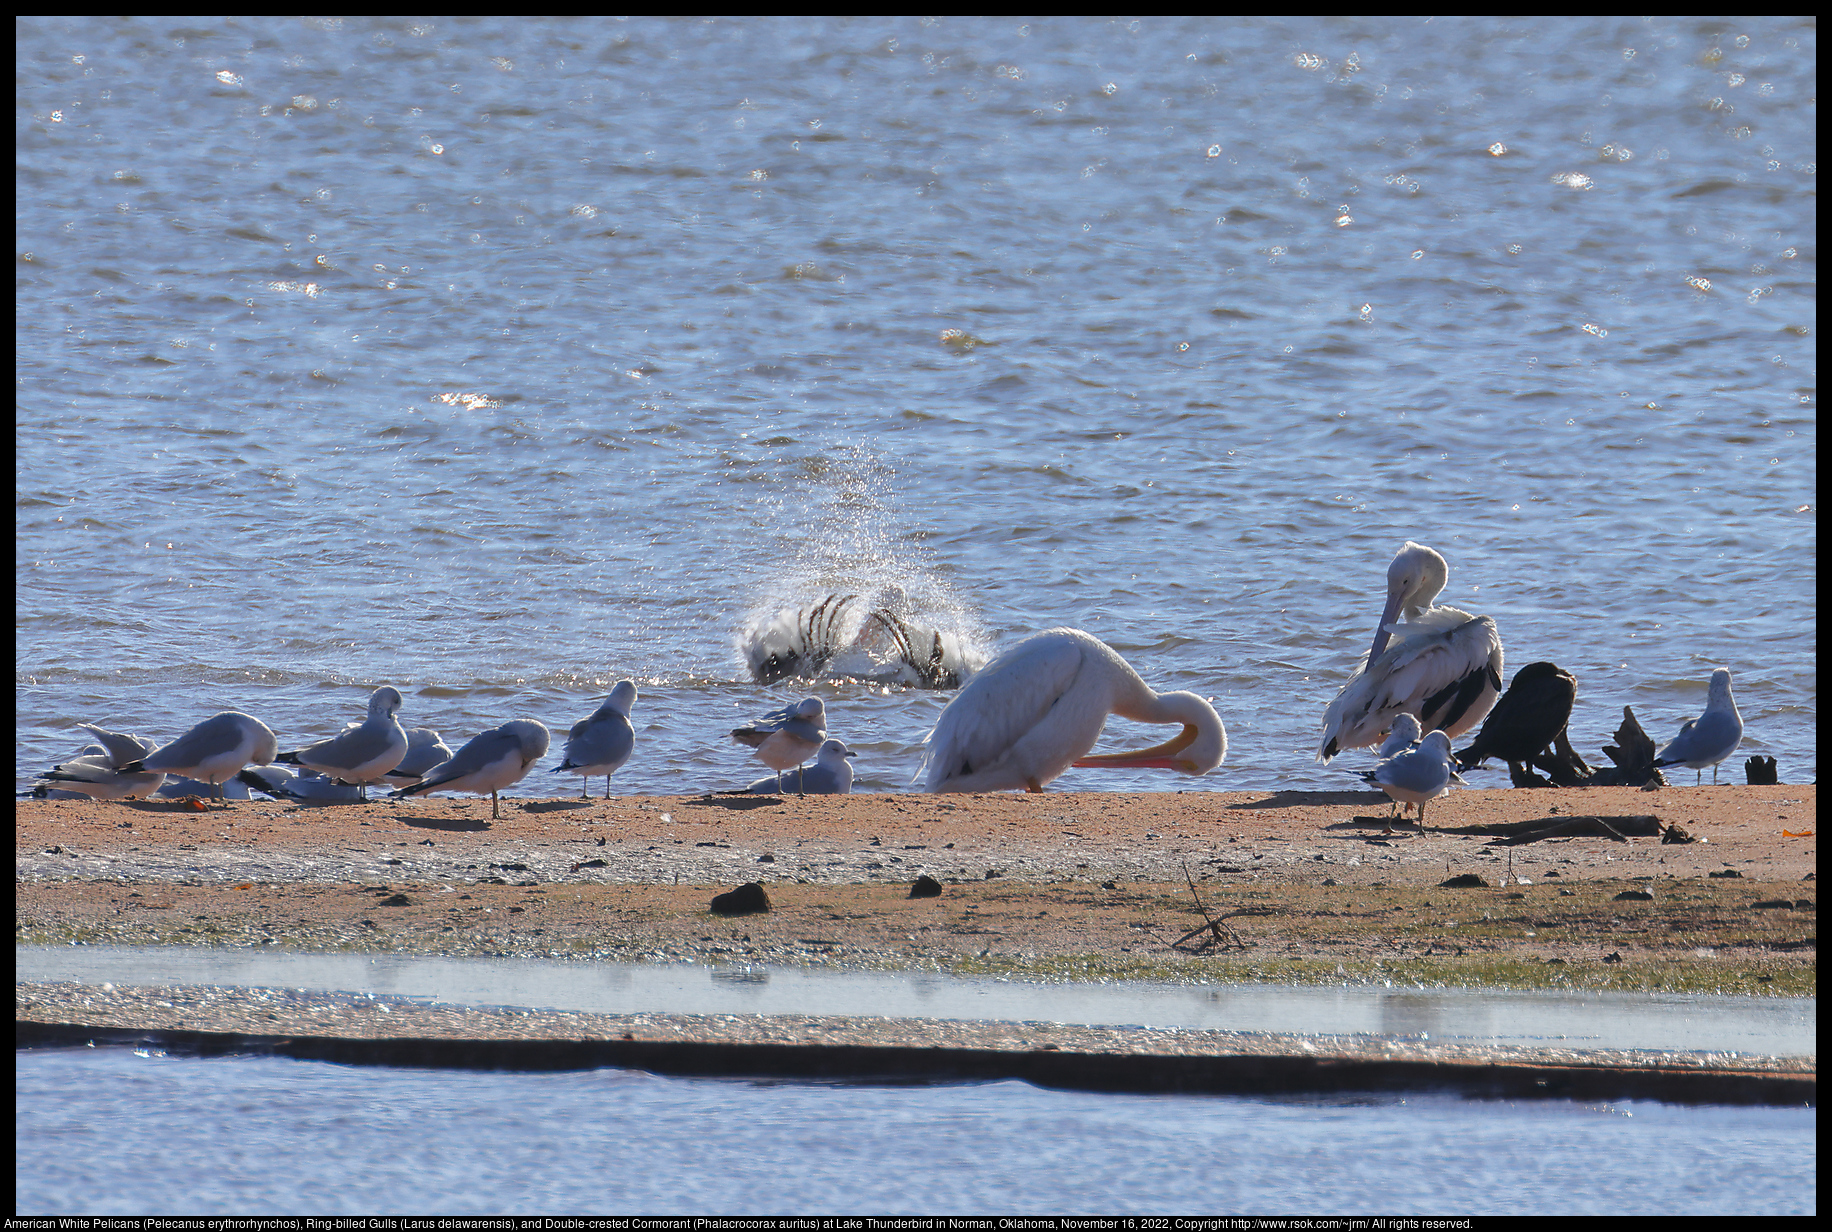 American White Pelicans (Pelecanus erythrorhynchos), Ring-billed Gulls (Larus delawarensis), and Double-crested Cormorant (Phalacrocorax auritus) at Lake Thunderbird in Norman, Oklahoma, November 16, 2022